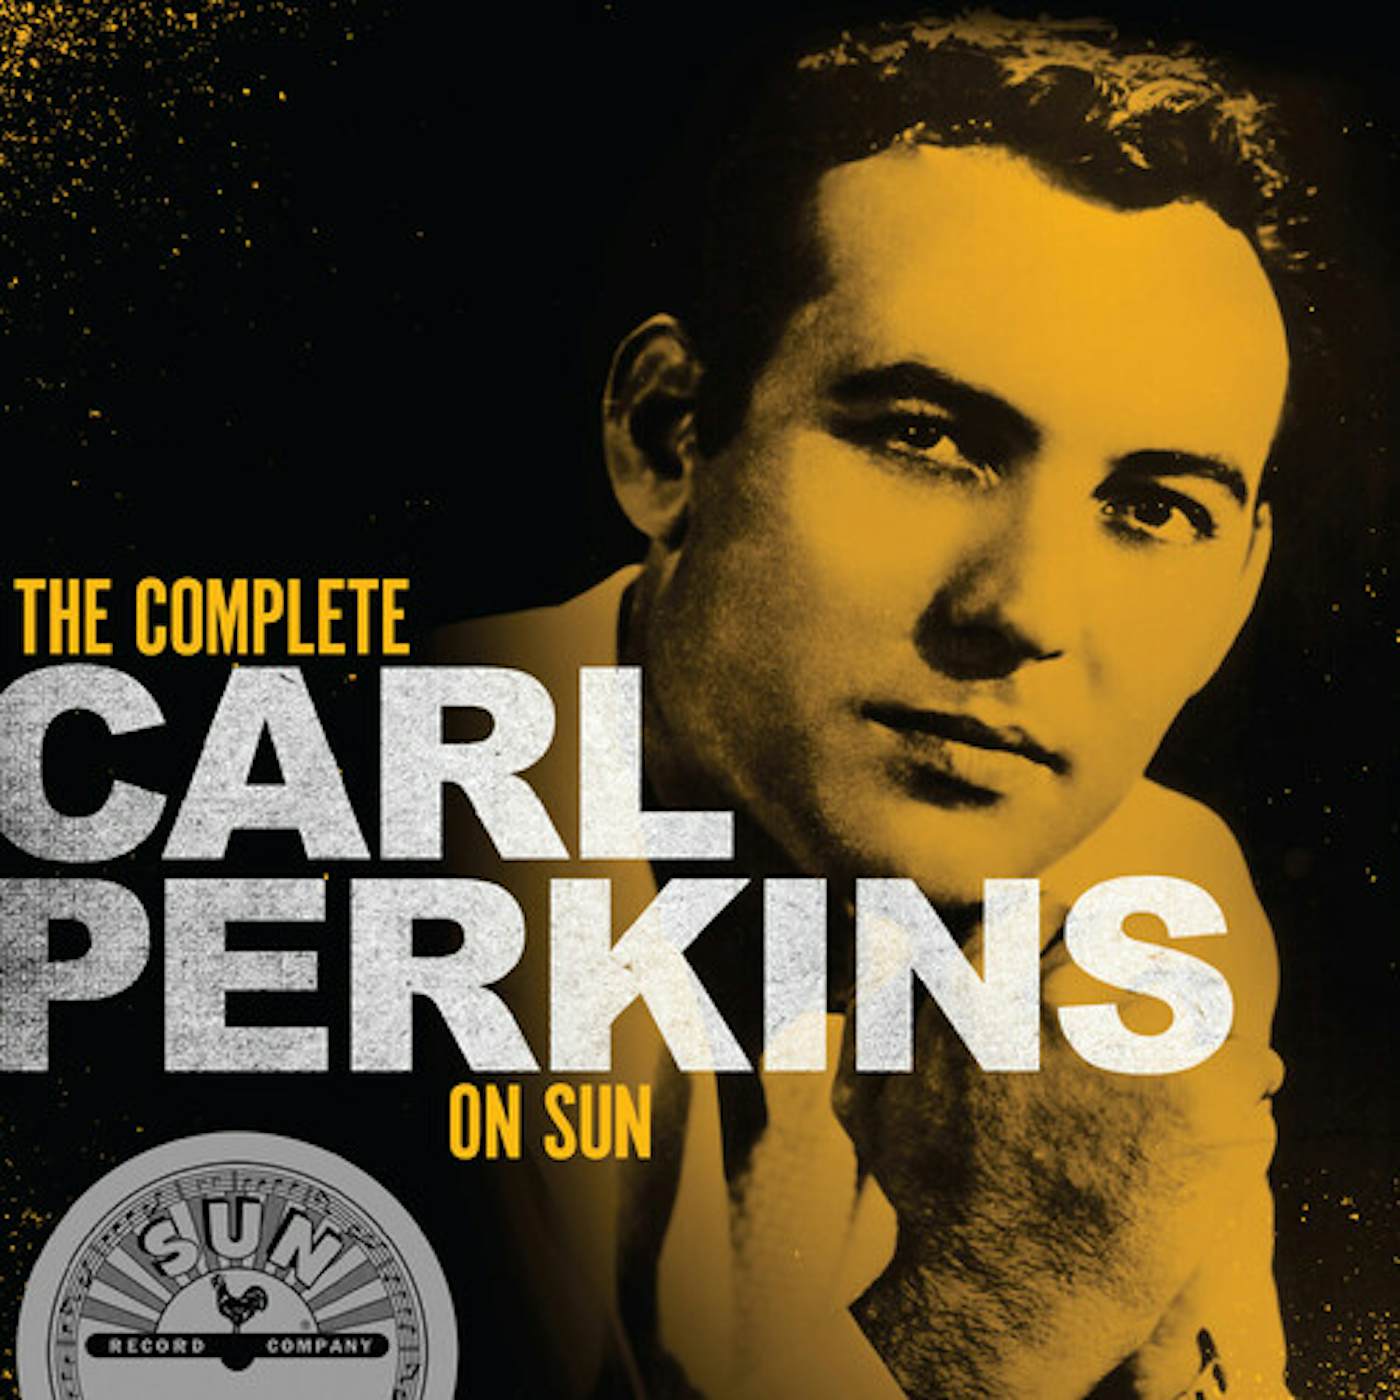 COMPLETE CARL PERKINS ON SUN CD